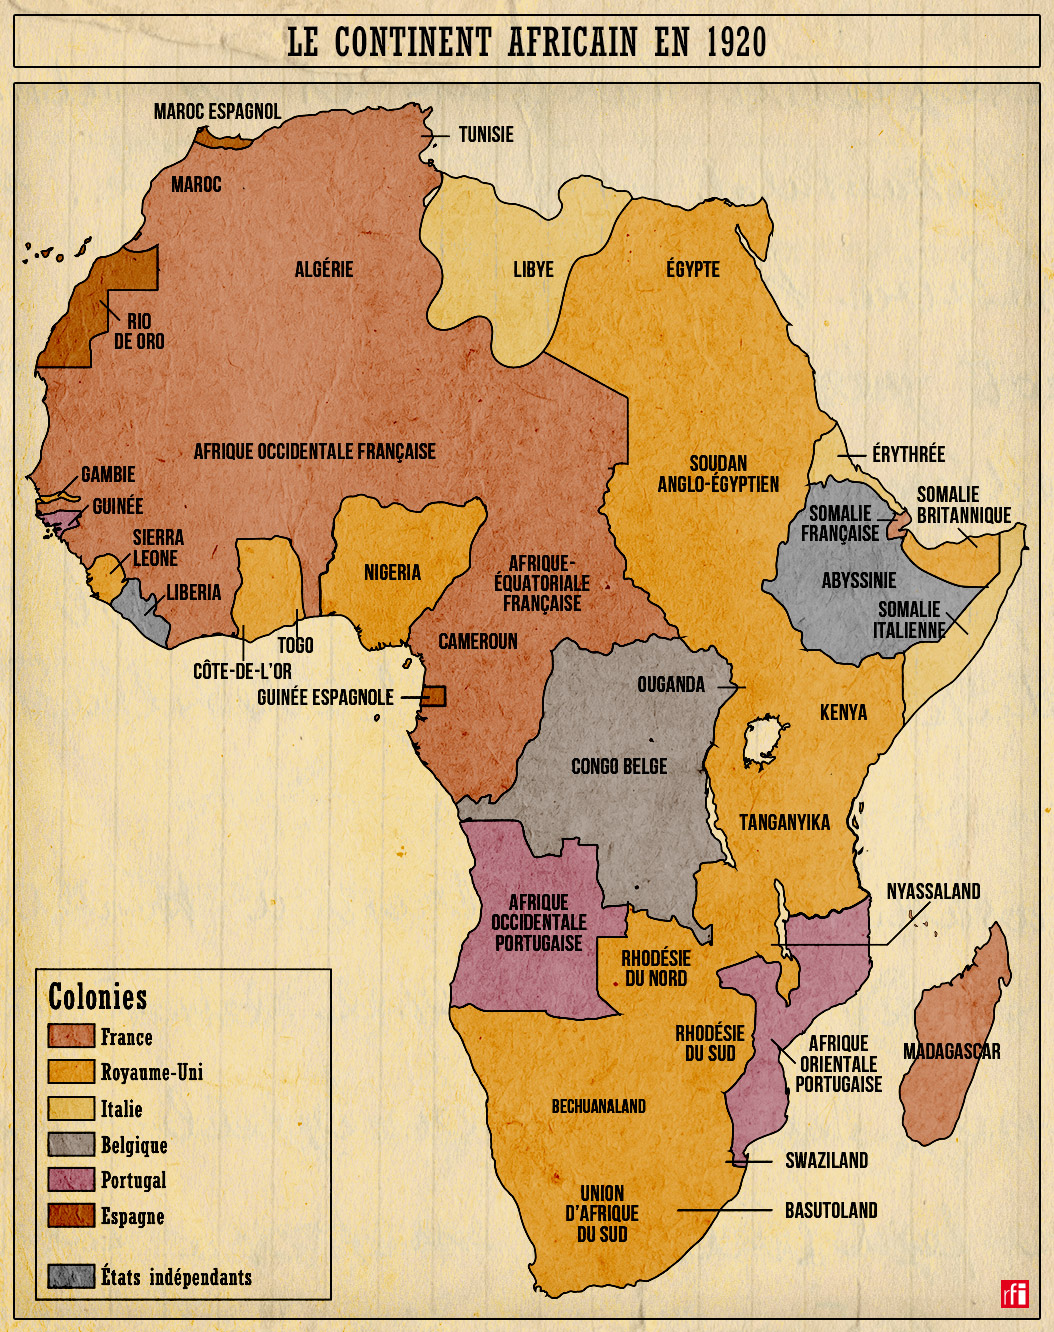 https://webdoc.rfi.fr/grande-guerre-afrique-colonies-1914-1918/img/carte-afrique-1920.jpg